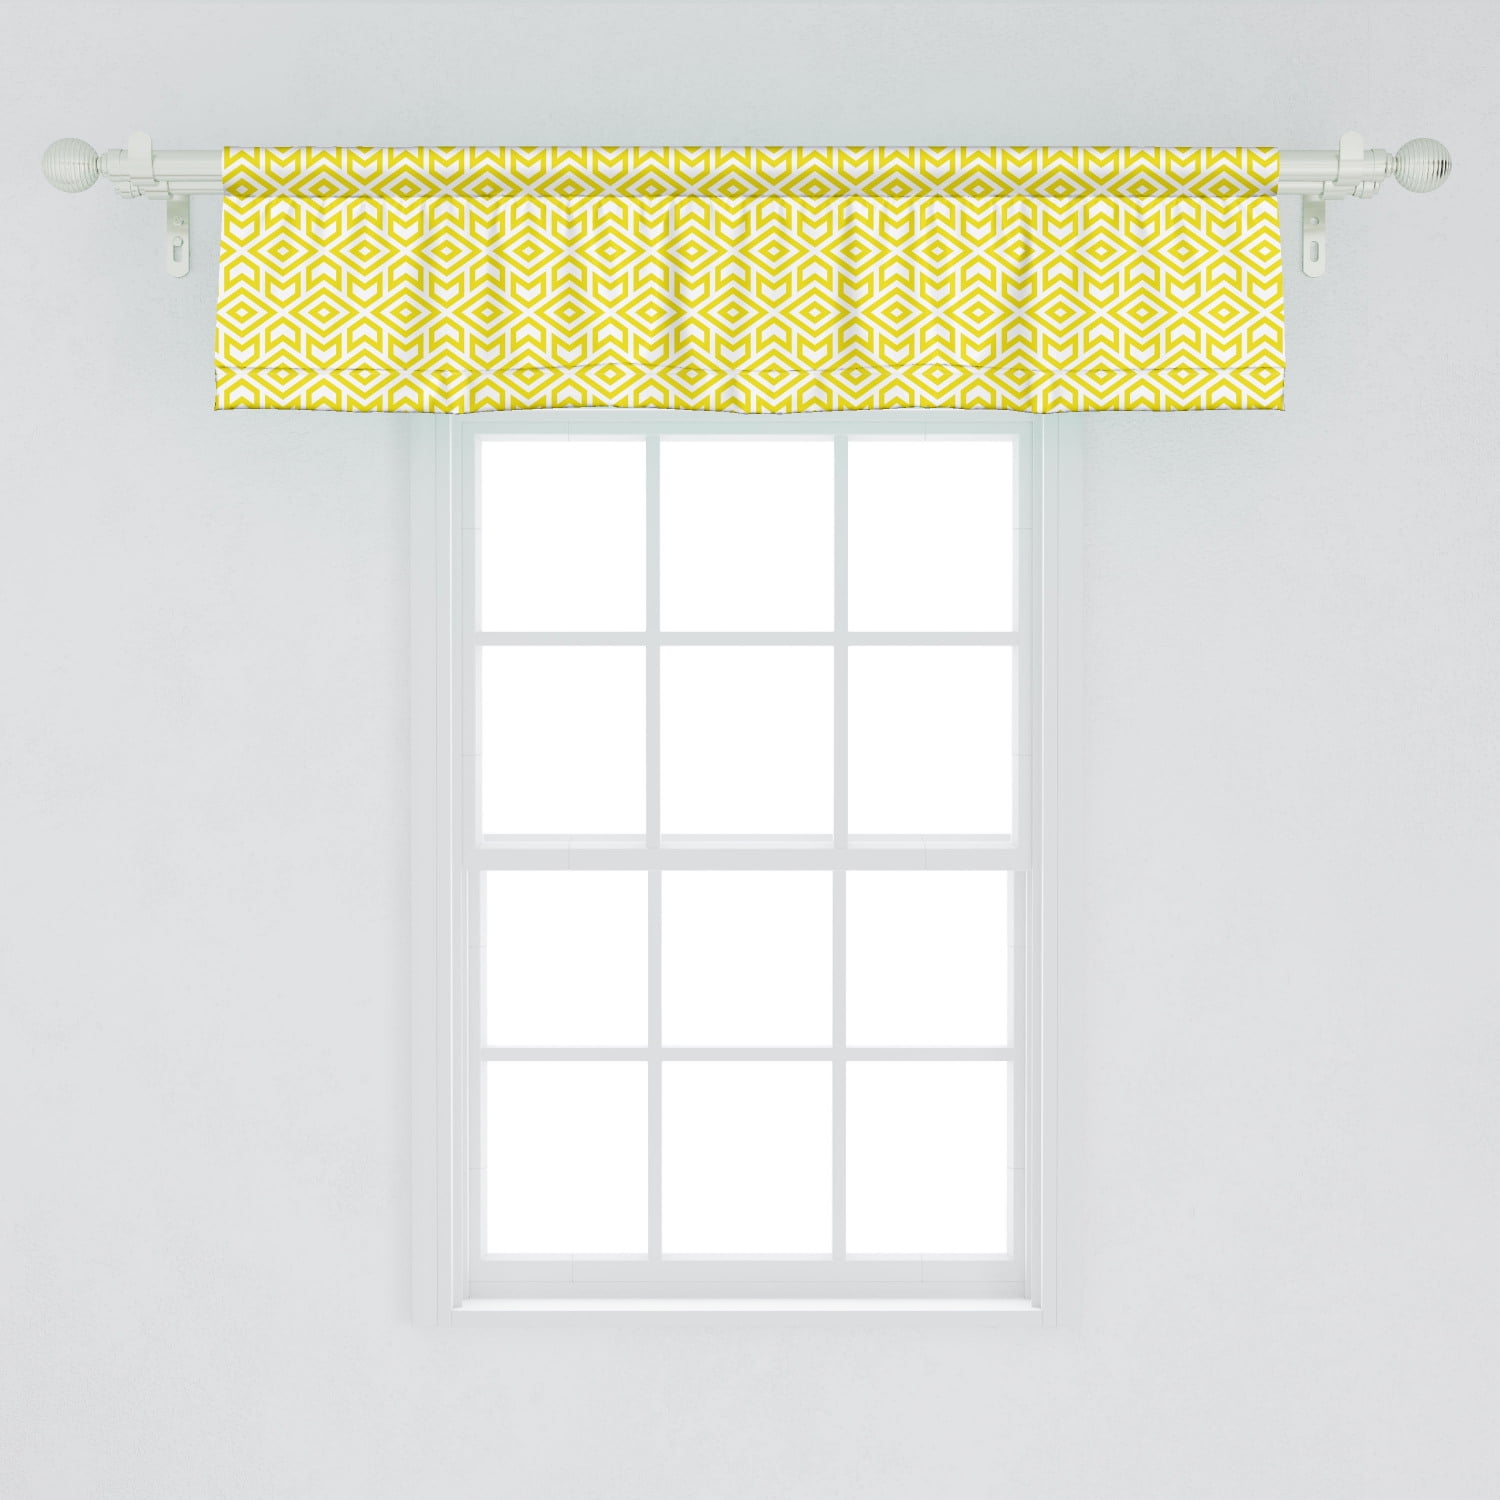 Chevron Yellow Gray Polka Dot Livingroom Bedroom Kitchen Window Valance Decor 